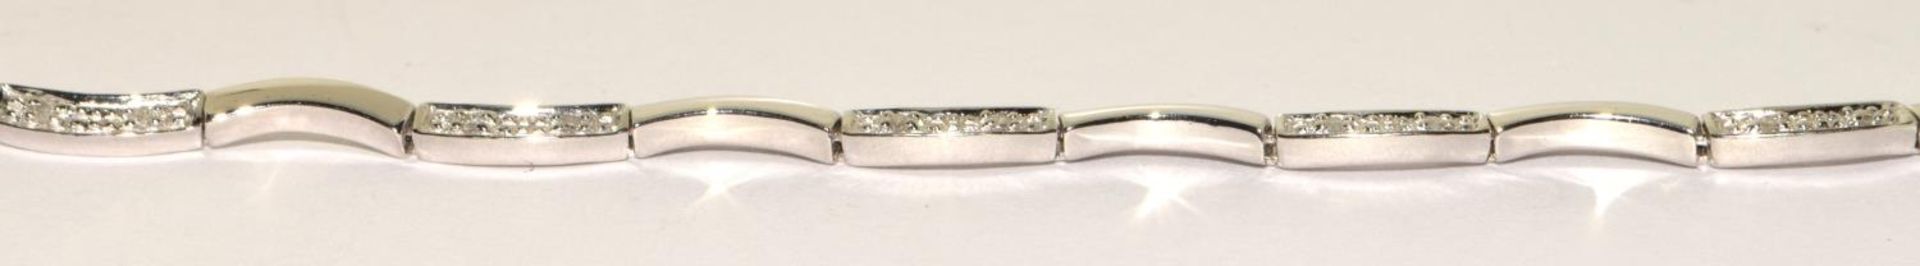 Diamond 9ct white gold 7g 7.5inch bracelet - Image 4 of 5